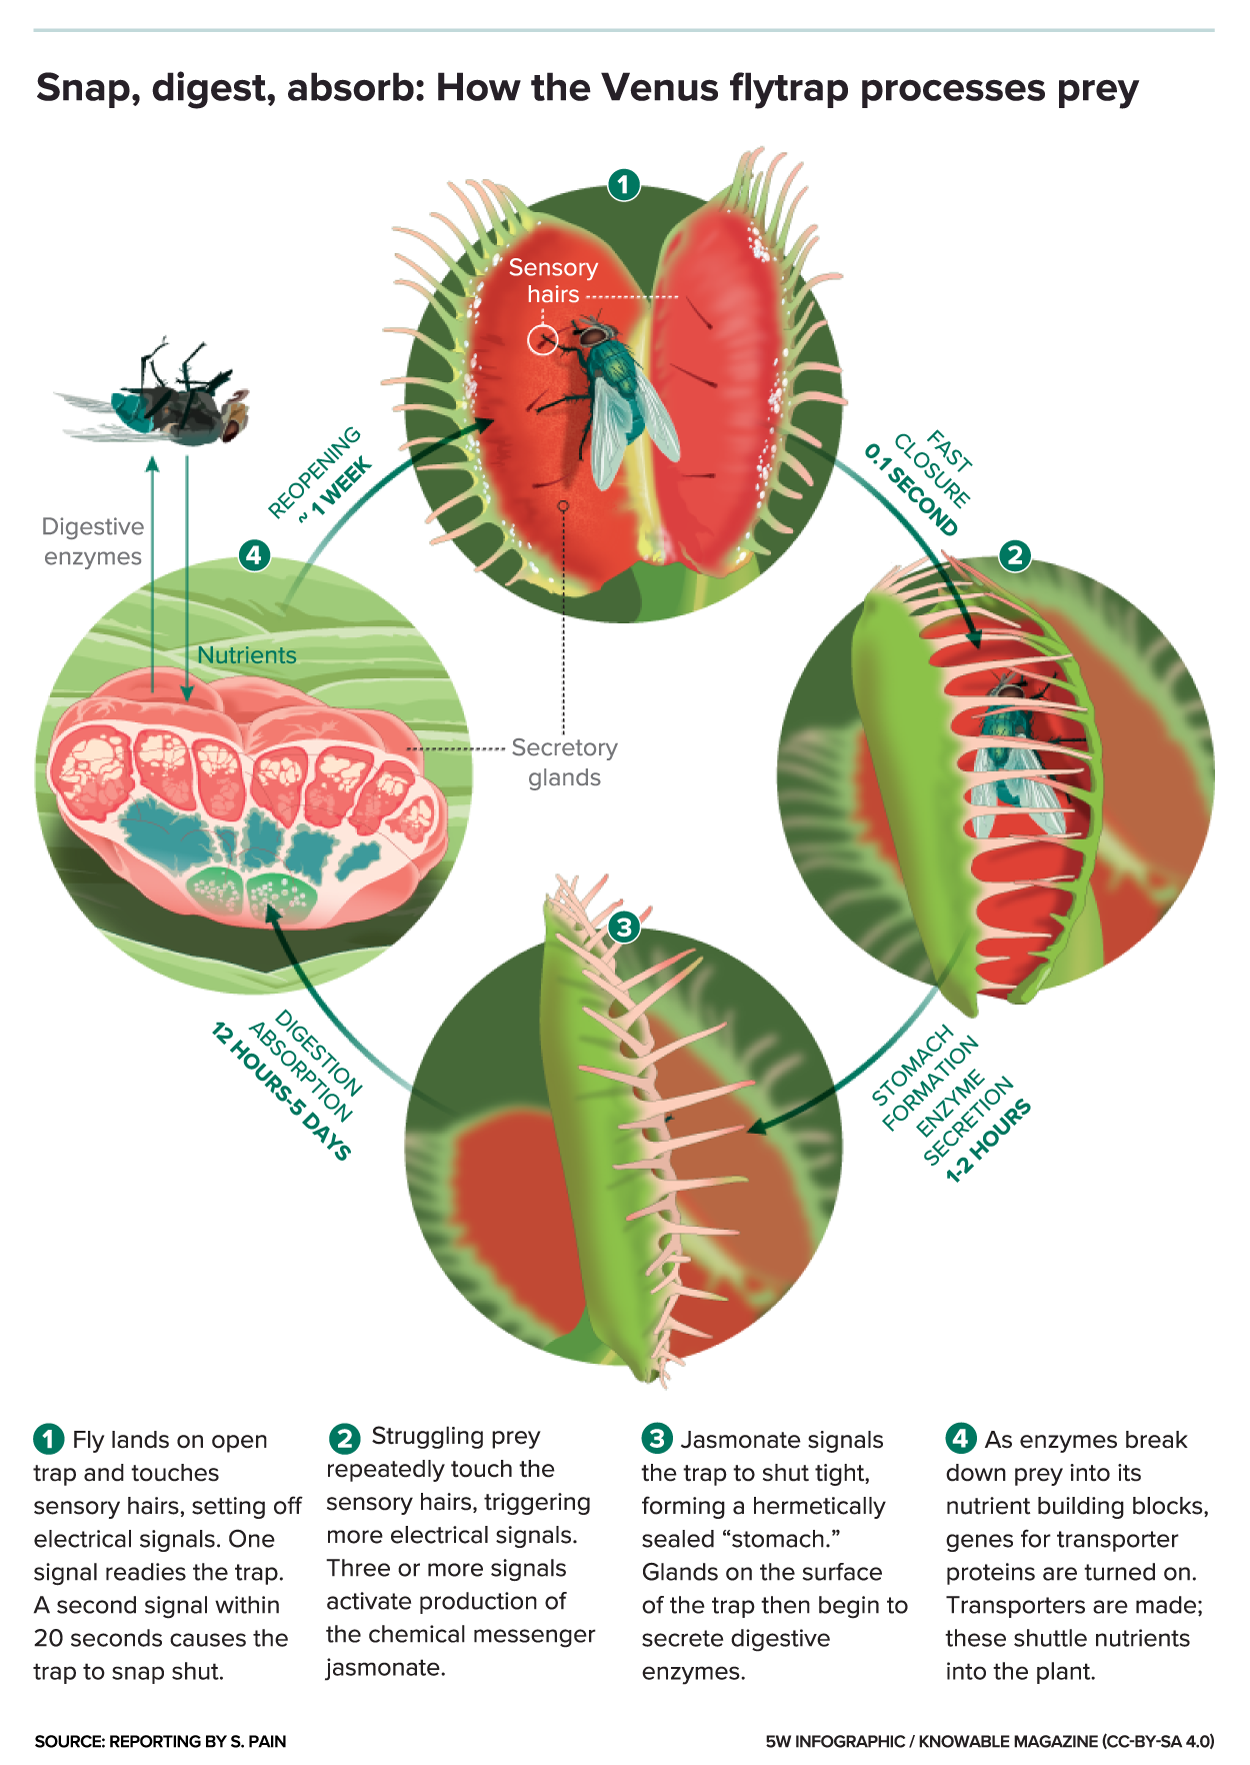 Venus flytrap: How does it work?